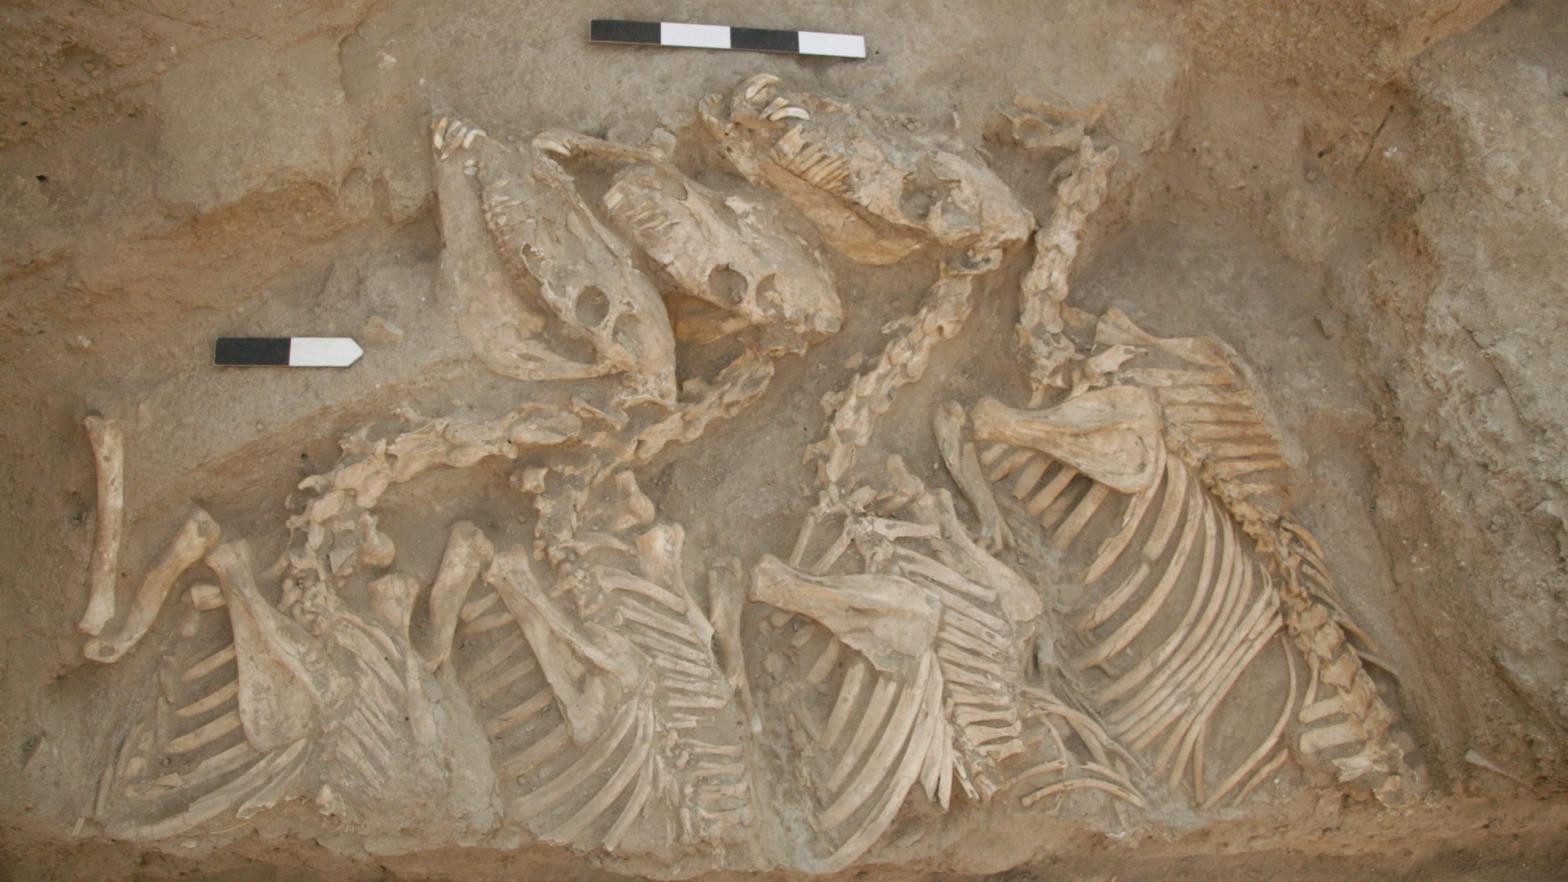 Four kunga skeletons lying in situ in Umm el-Marra, Syria (Photo: Glenn Schwartz / John Hopkins University.)